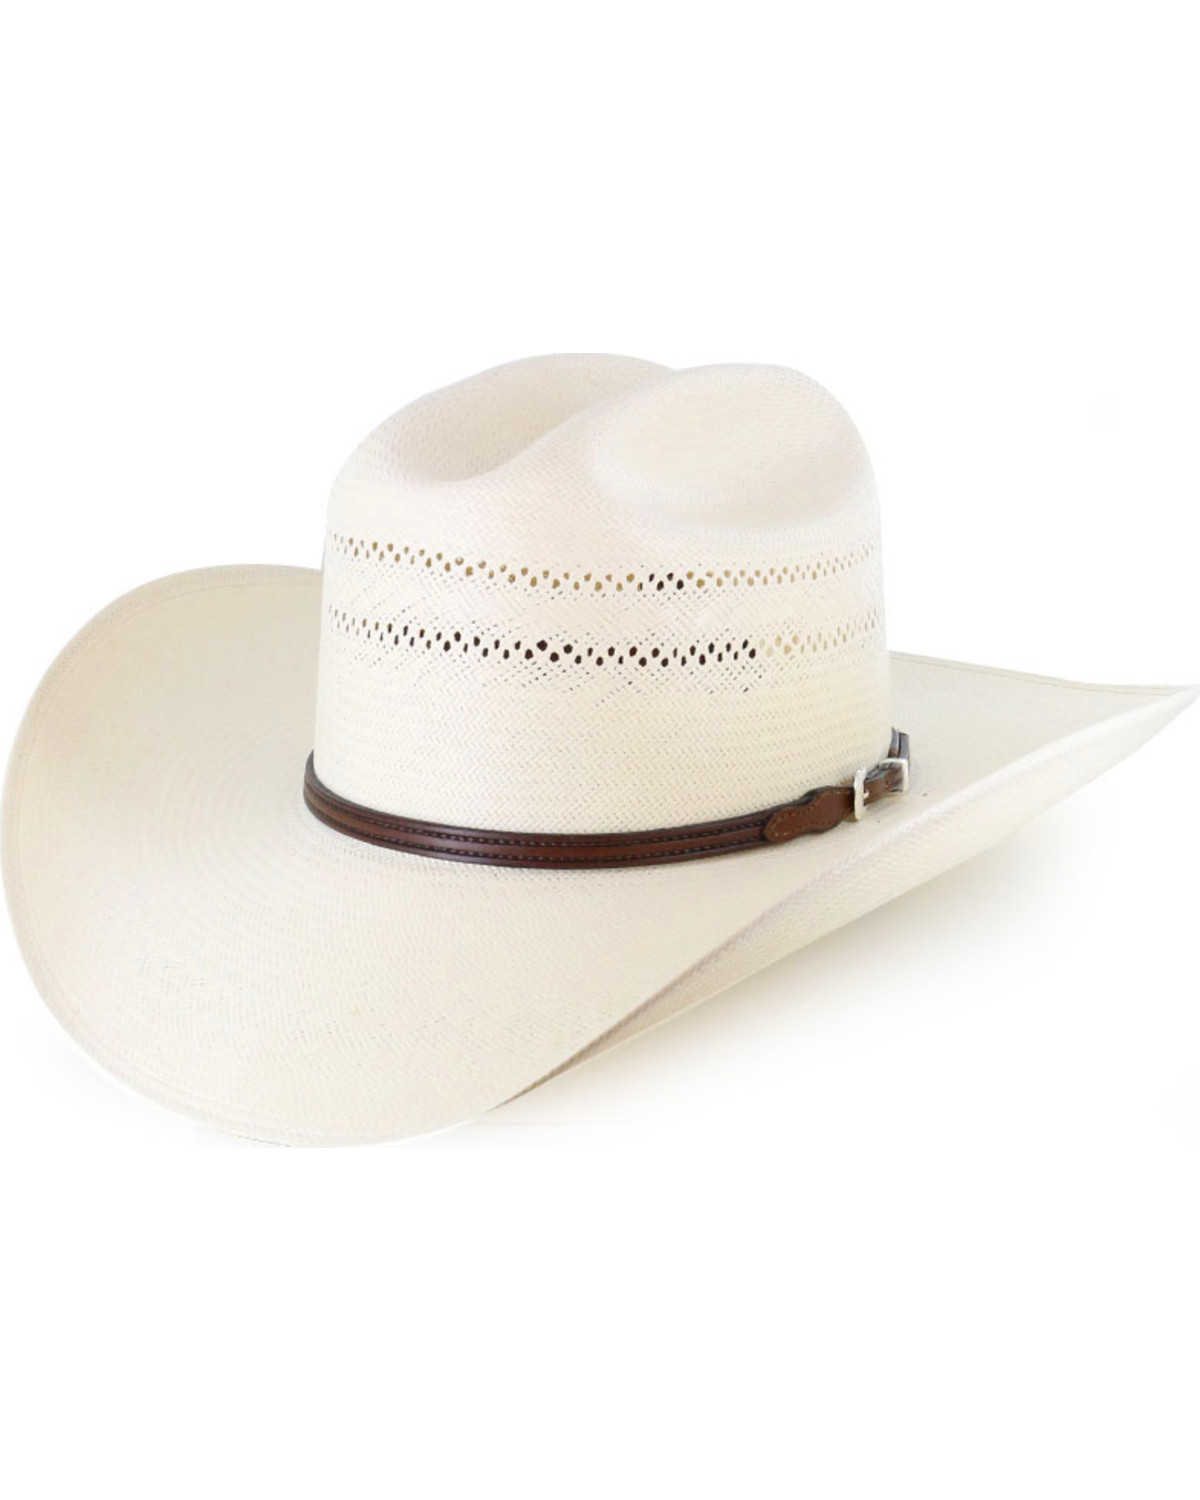 George Strait by Resistol Road Ranch 10X Straw Cowboy Hat